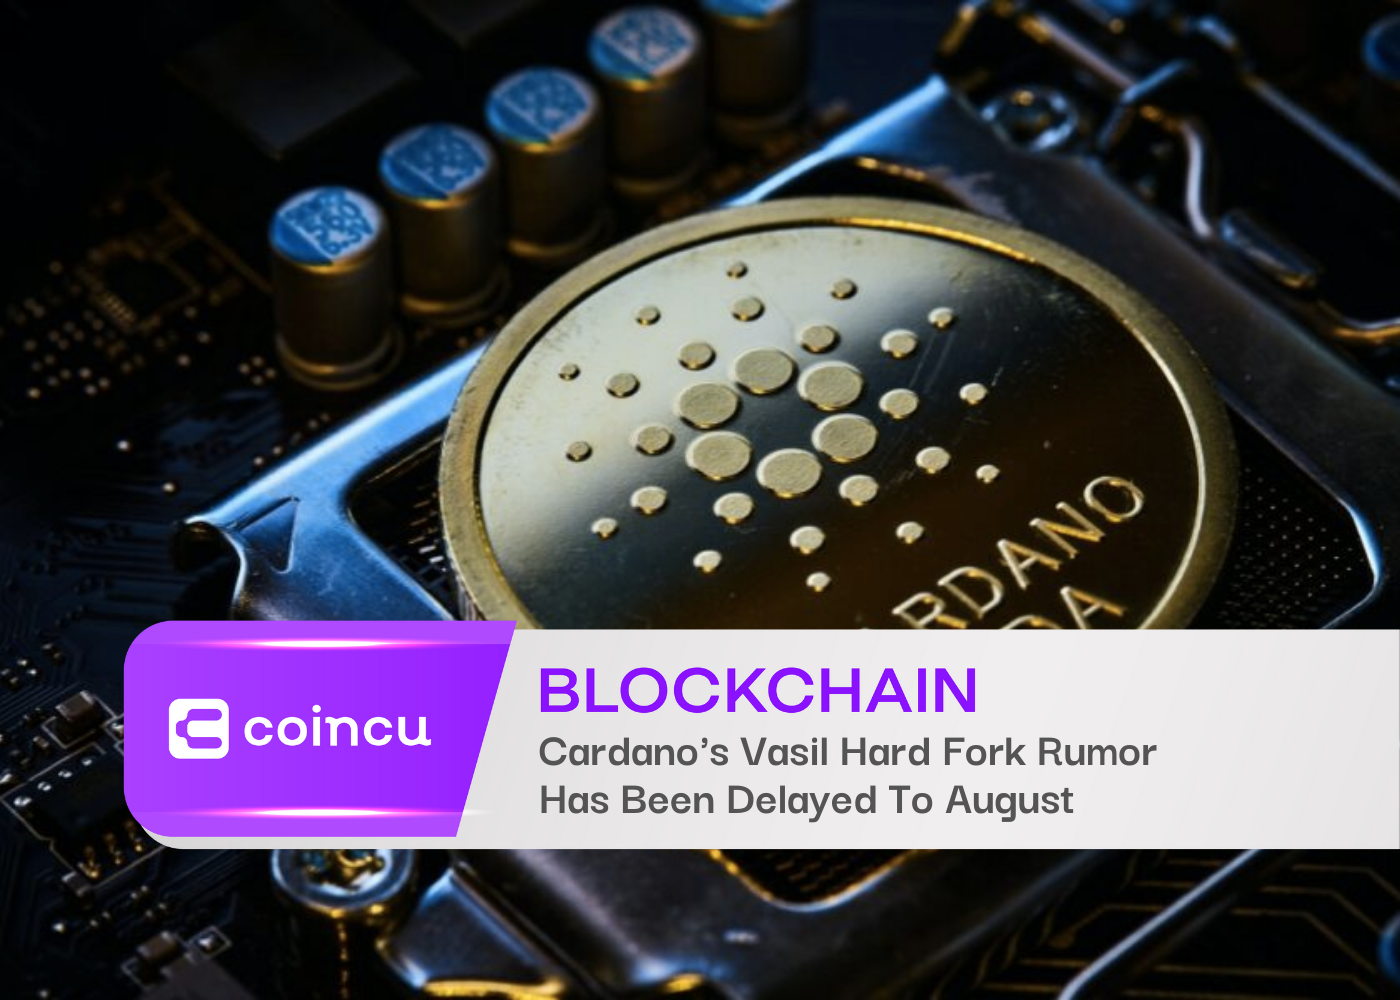 Cardano’s Vasil Hard Fork Rumor Has Been Delayed To August